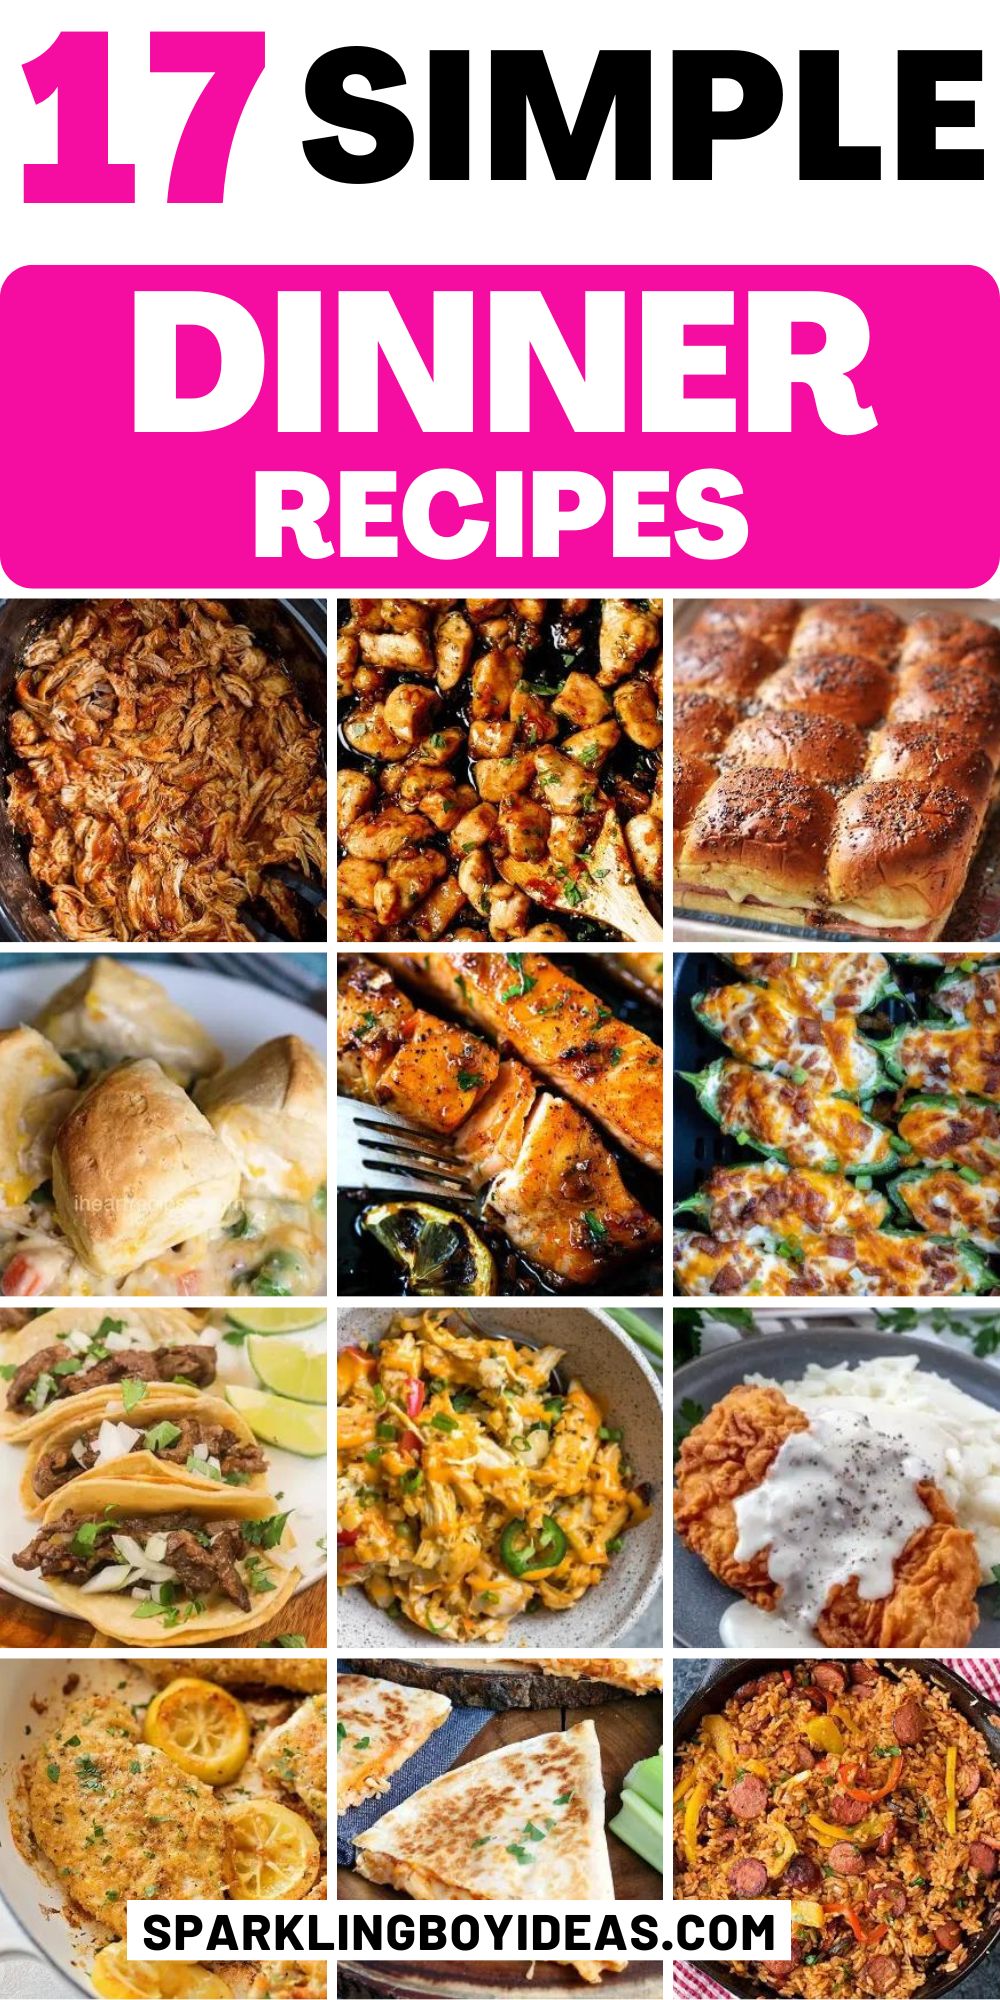 17 Simple Dinner Recipes